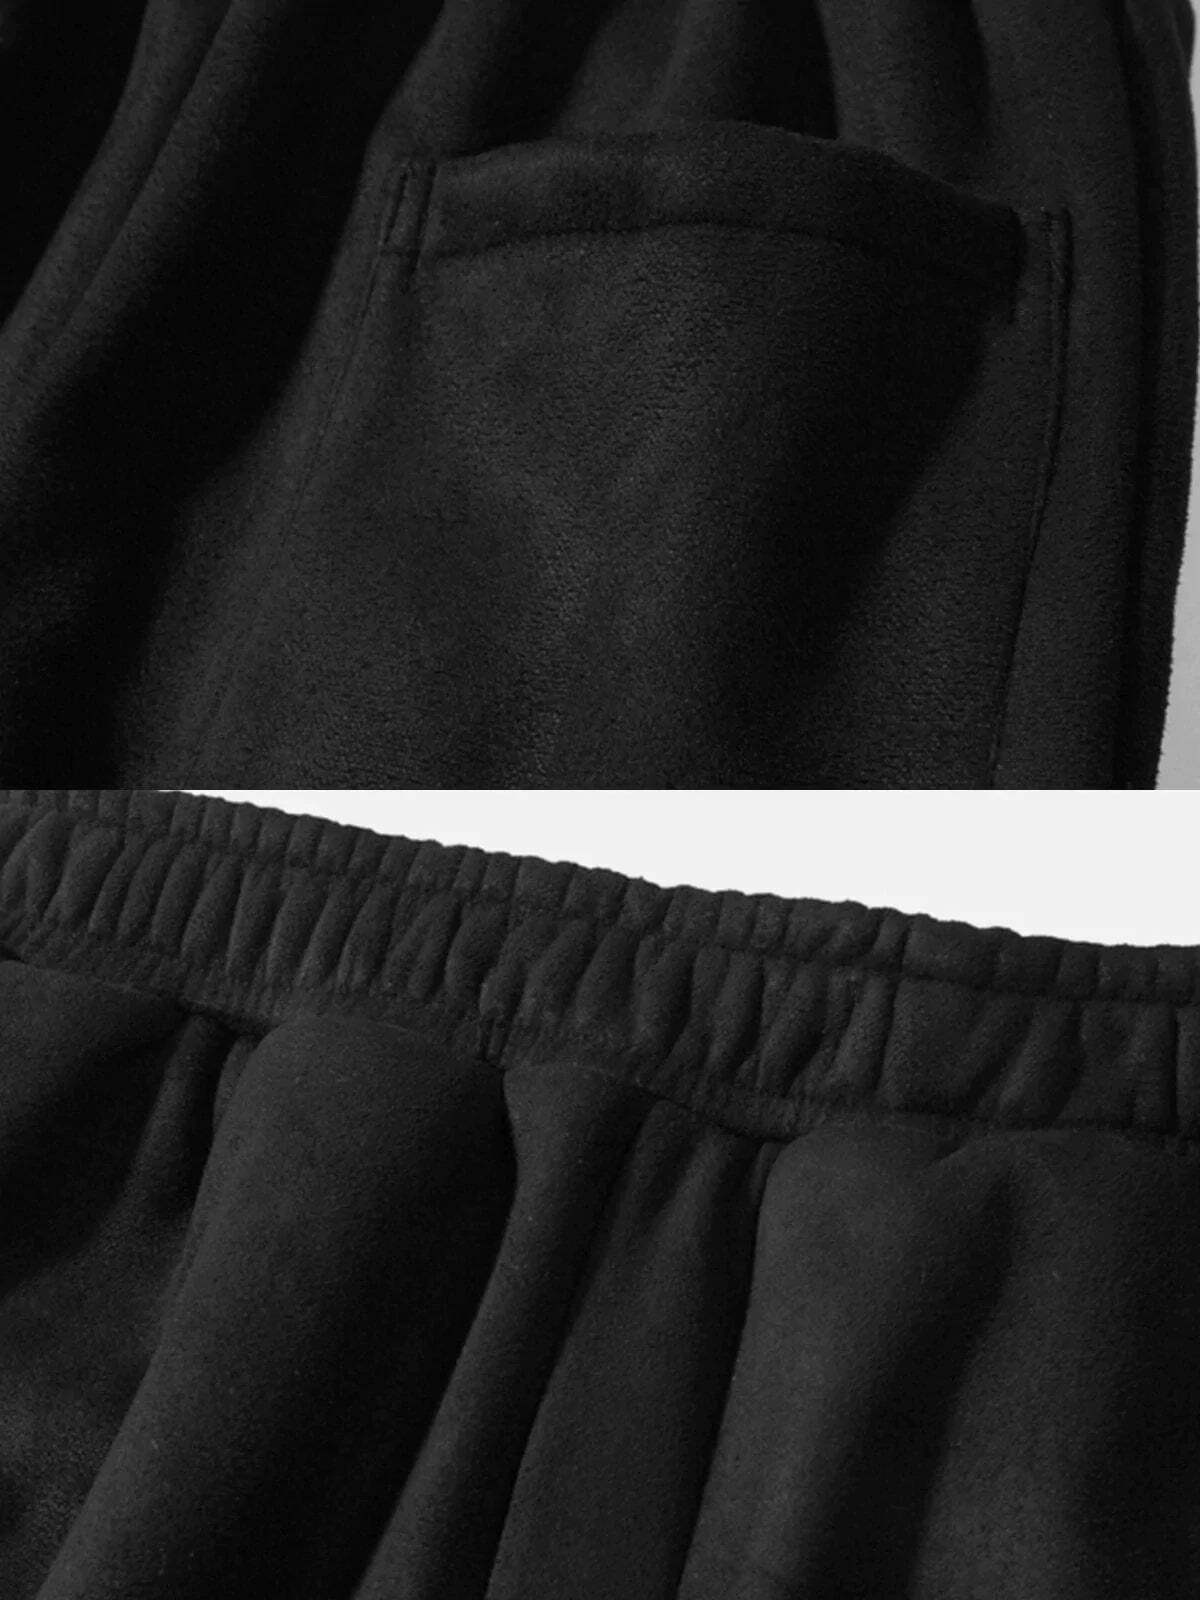 custom suede sweatpants labeled design & urban style 3397